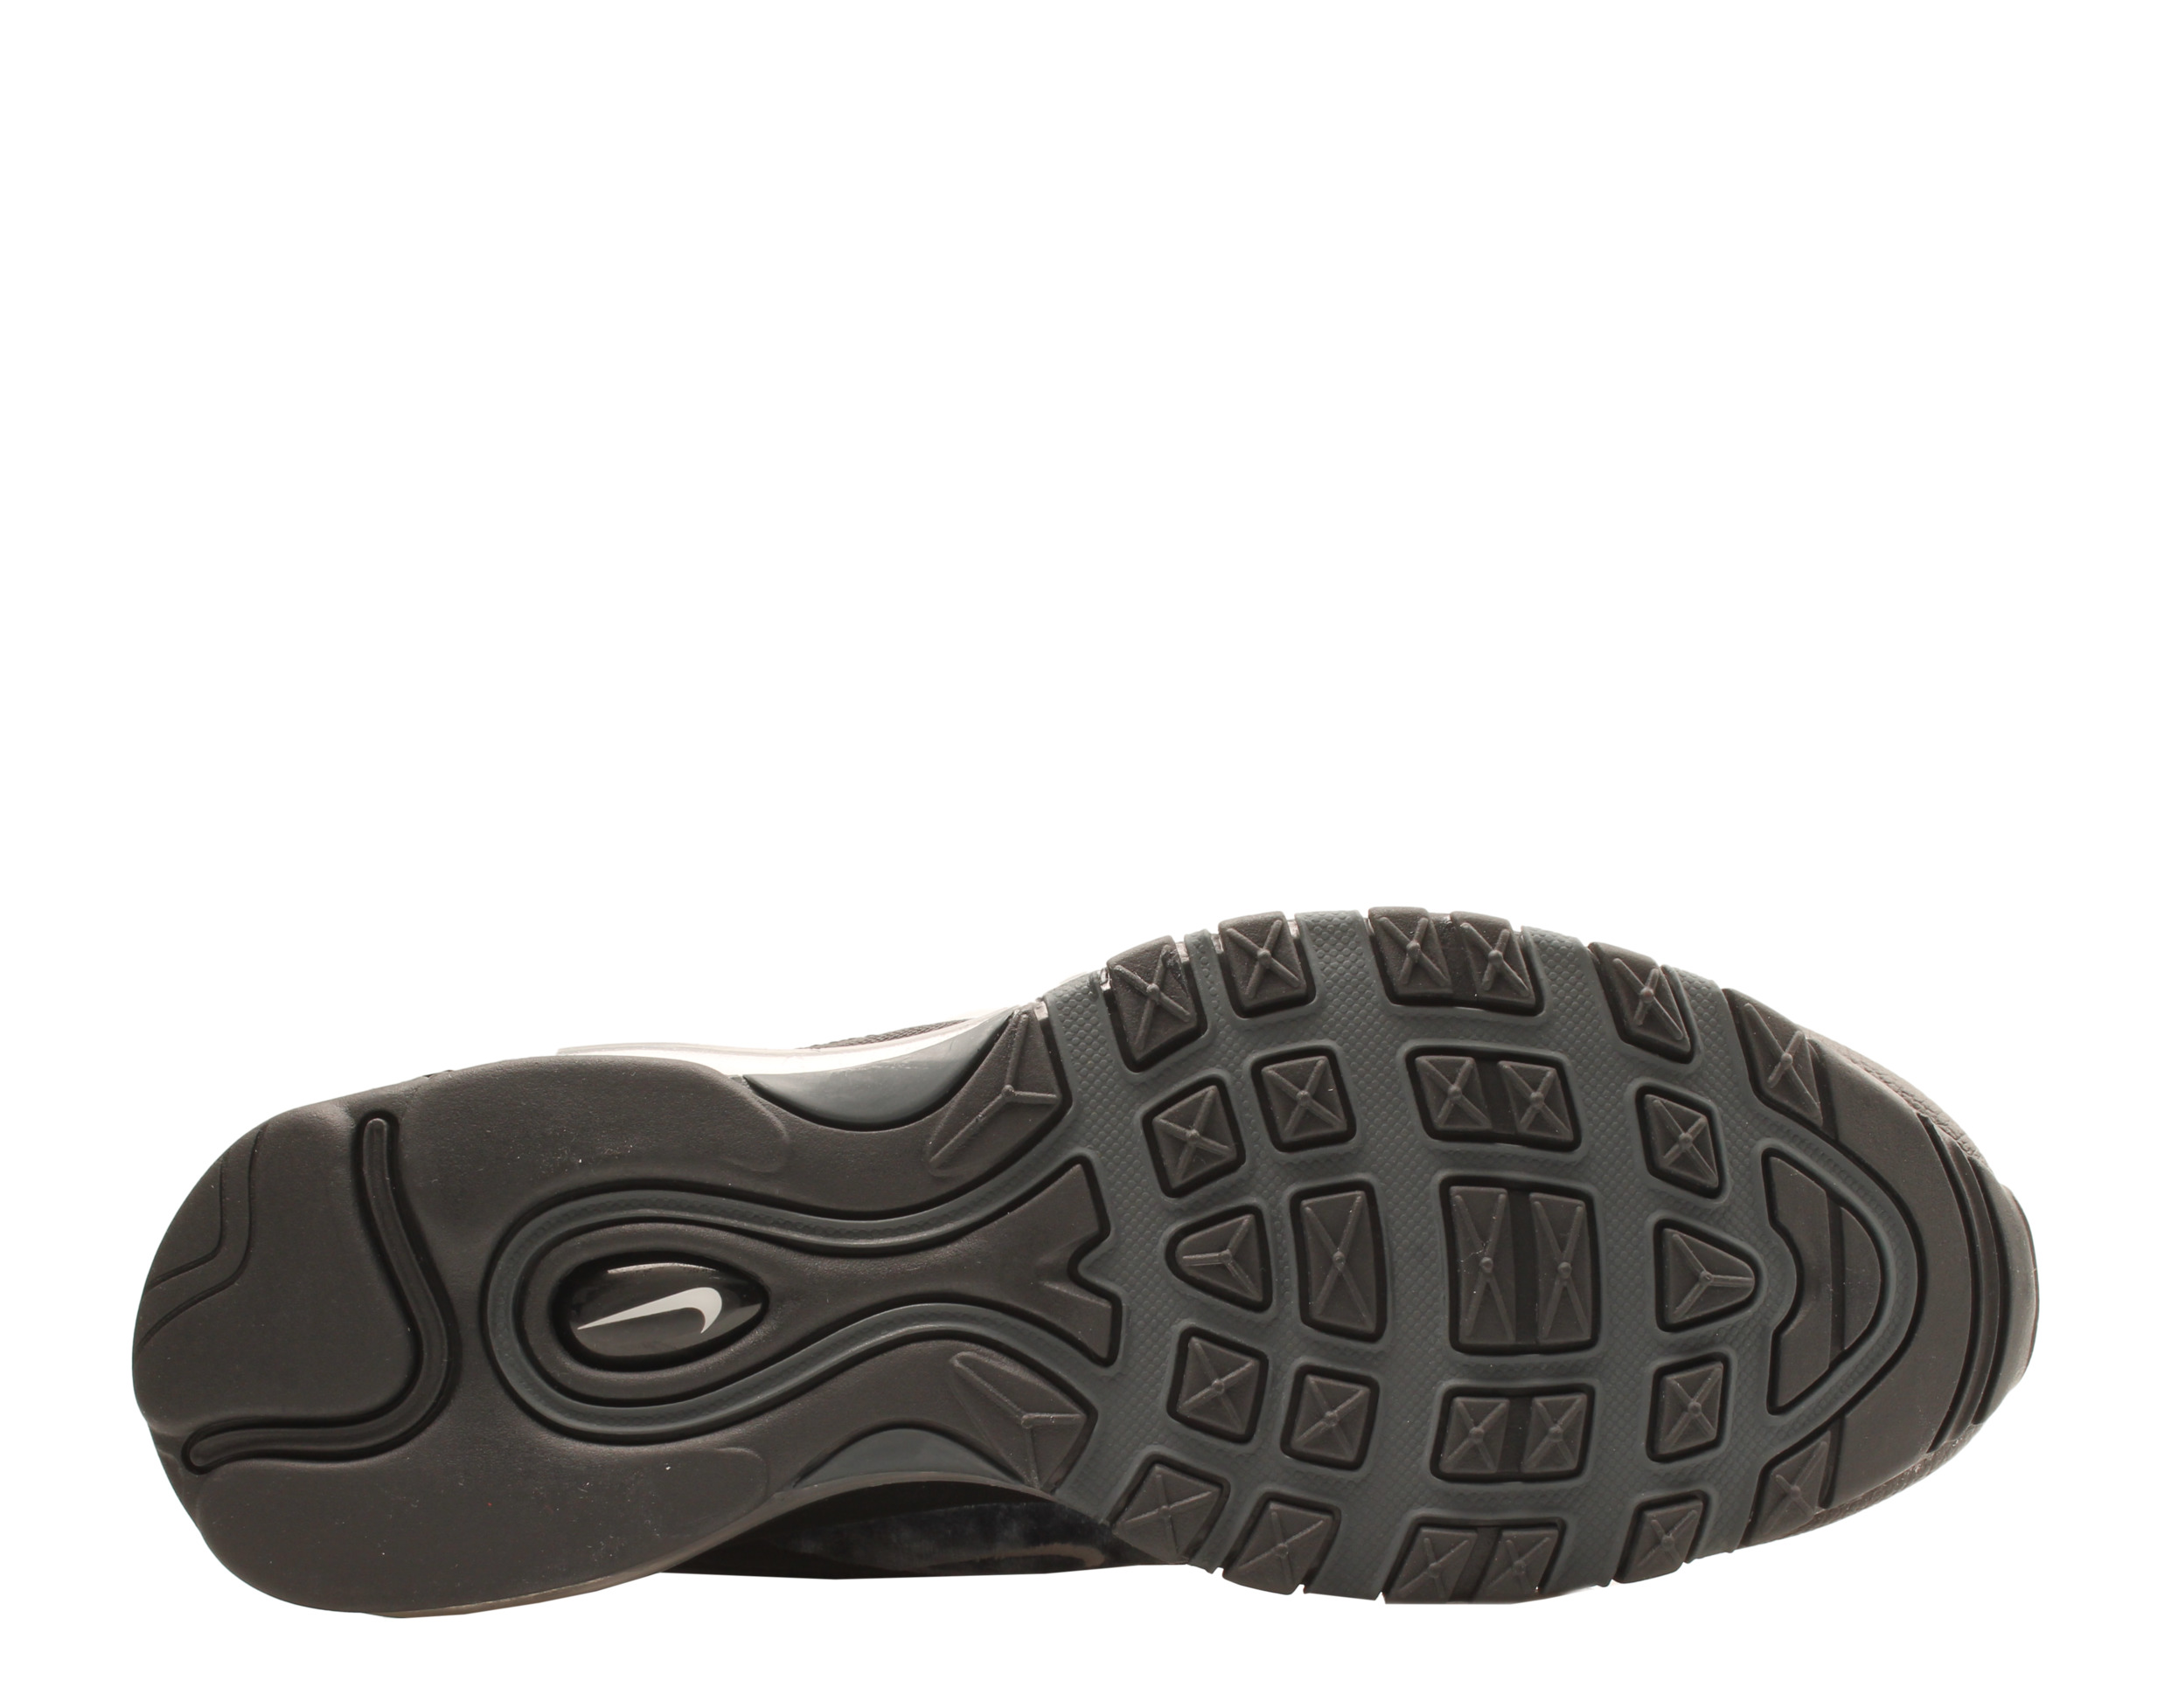 Men's Nike Air Max 97 Black/White-Anthracite (921826 015) - 9 - image 5 of 6